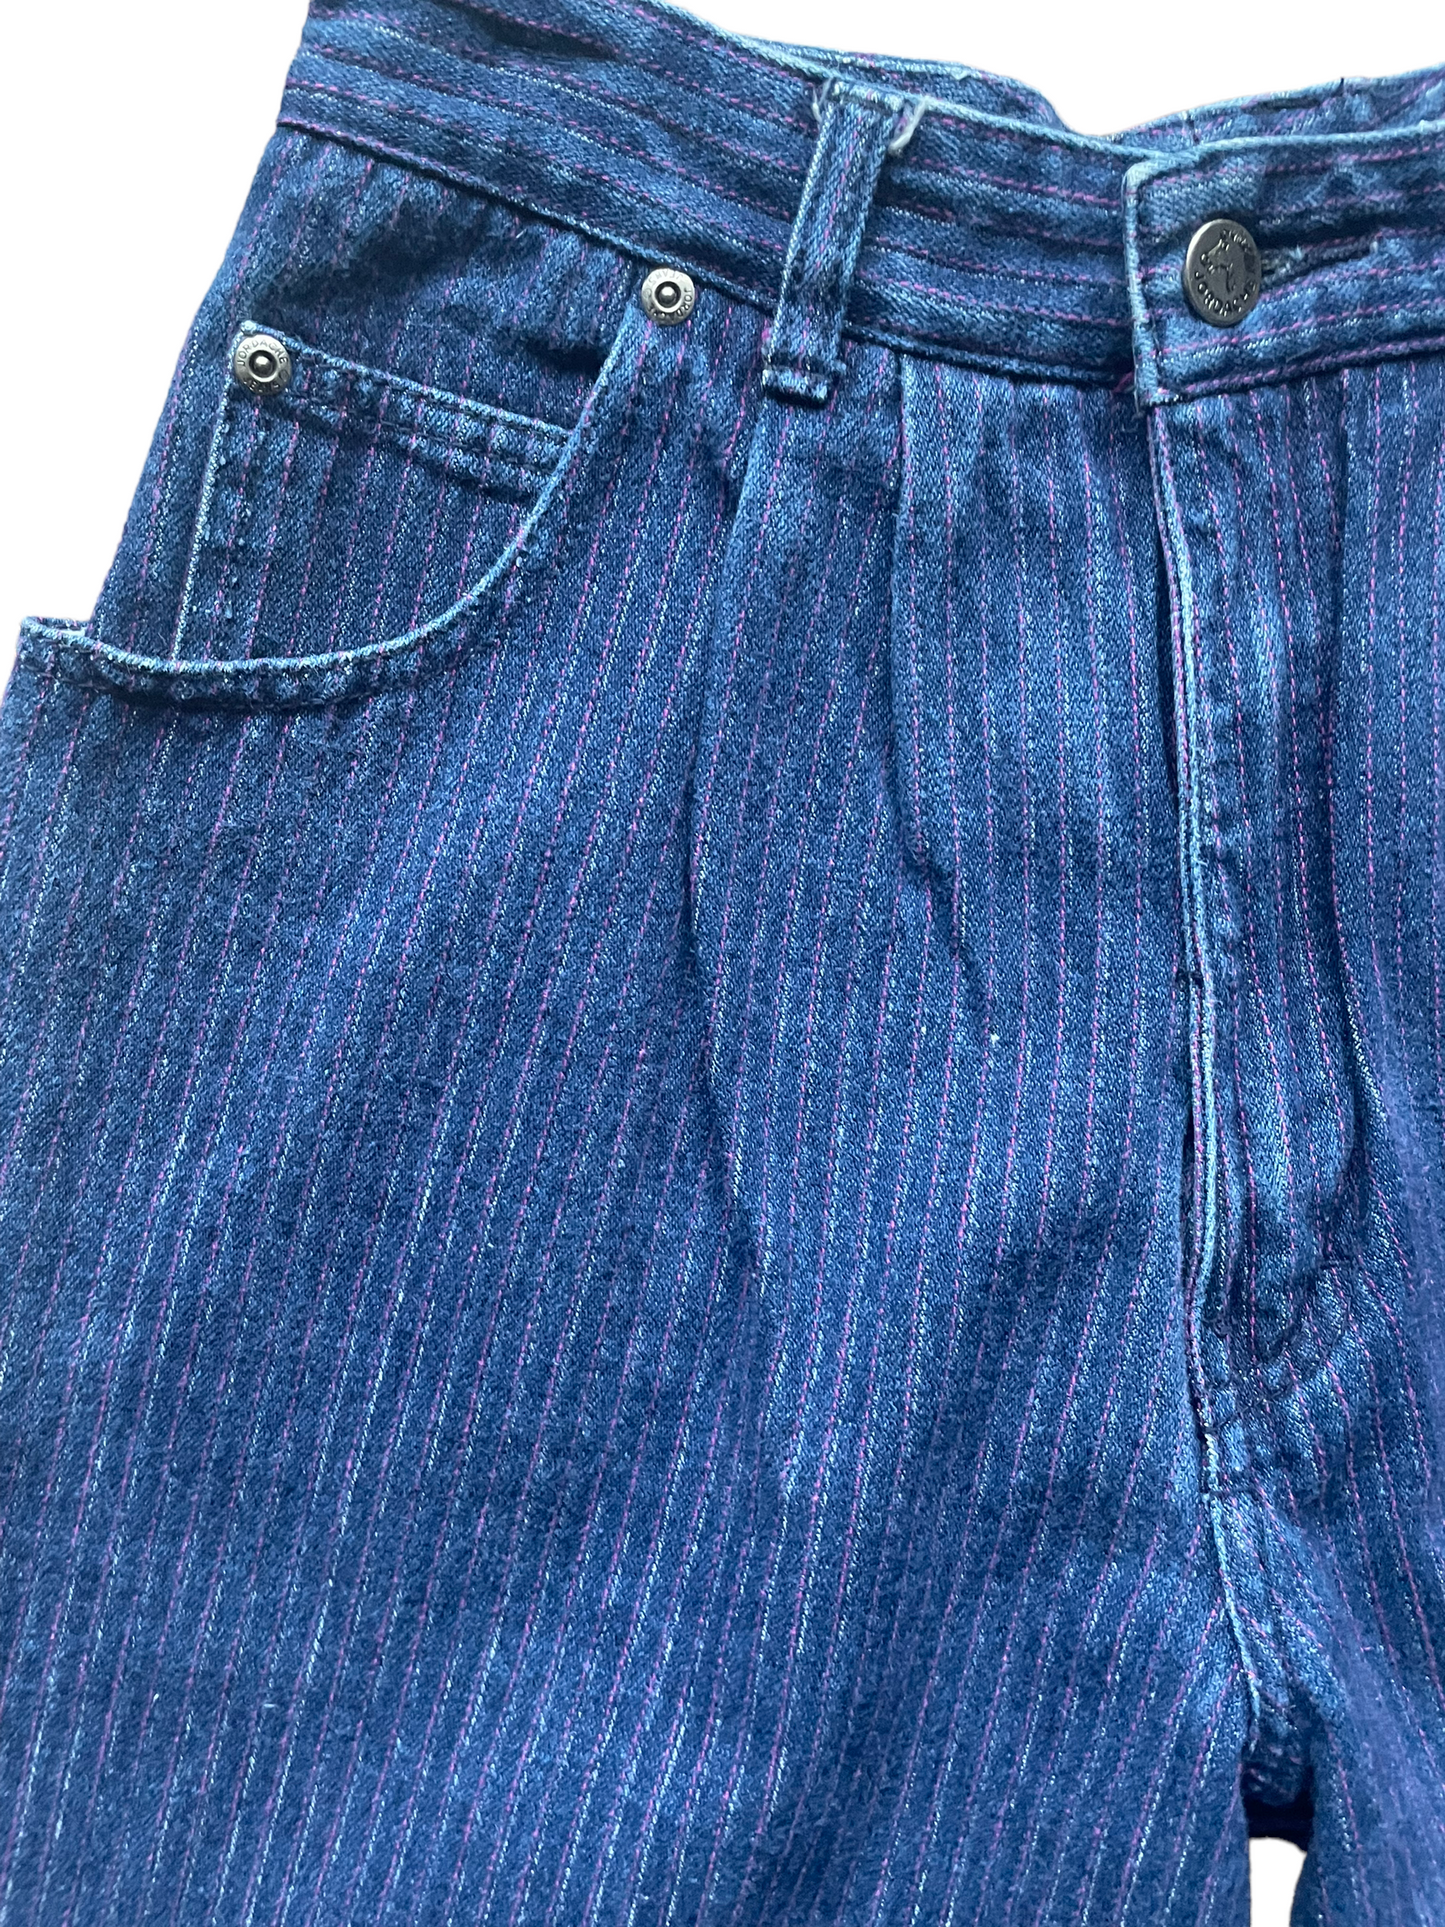 Right side waist view of Vintage 1980s Ladies Purple Pinstripe Jordache Jeans | Barn Owl Seattle | Vintage Ladies Jeans and Denim